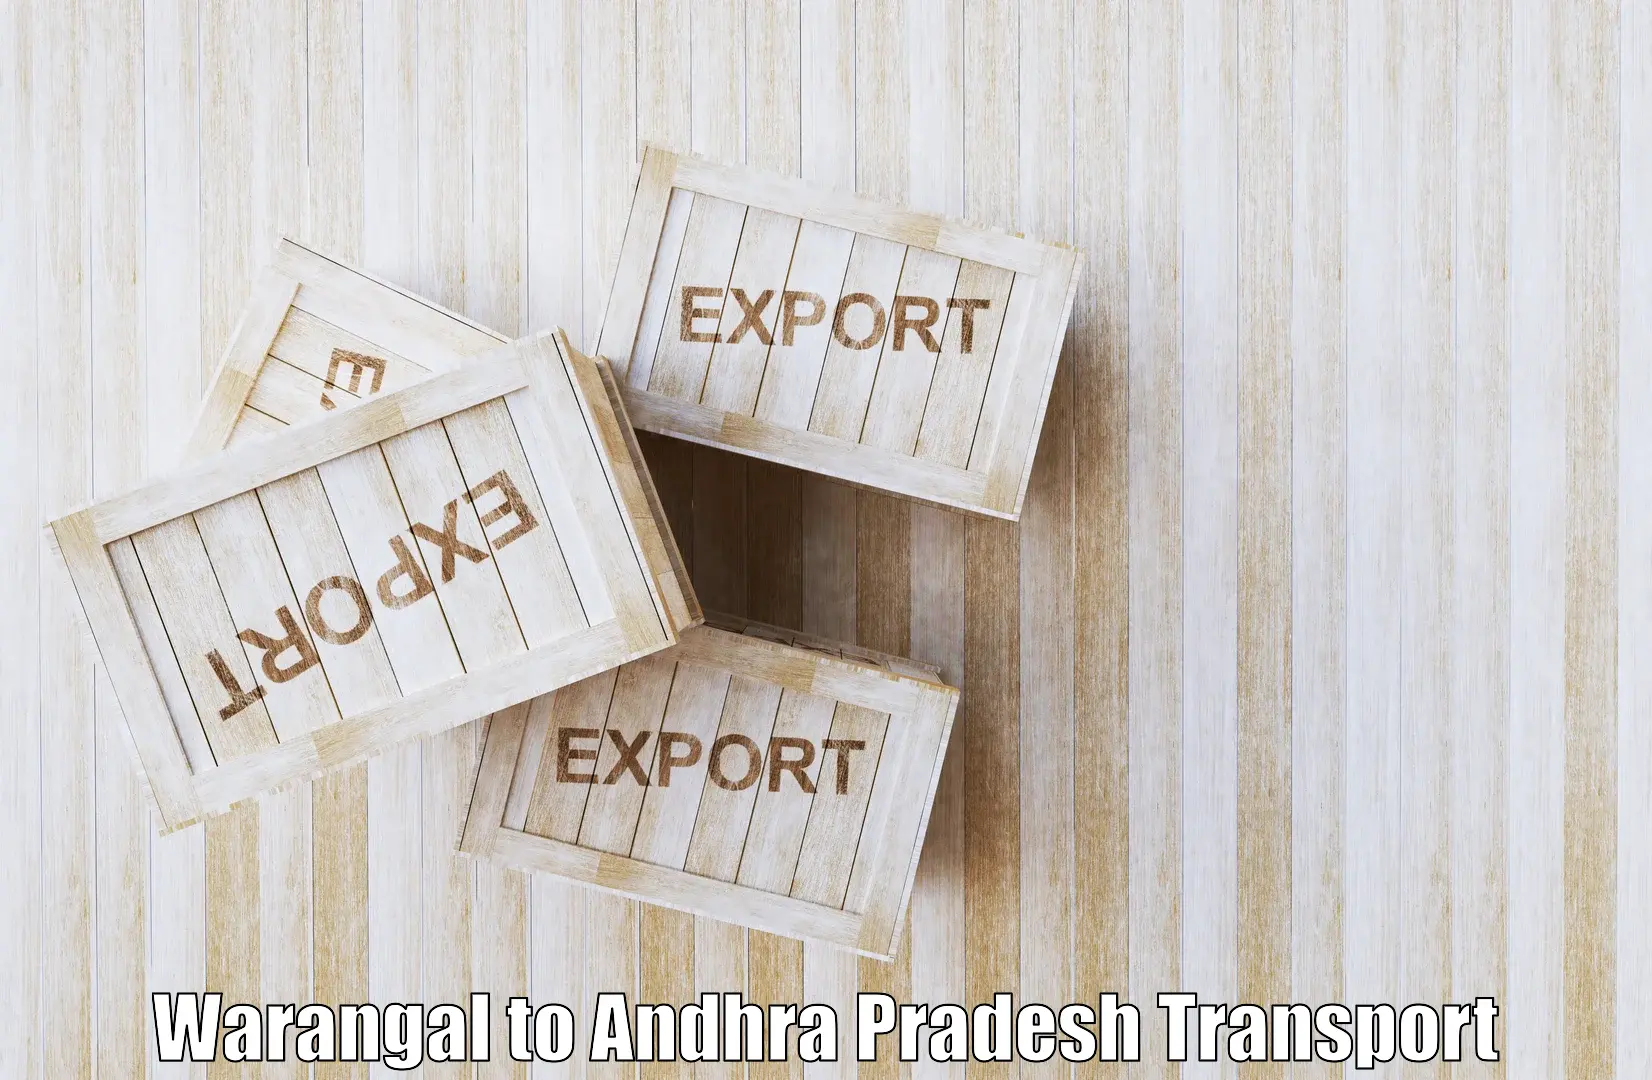 Container transportation services in Warangal to Kanigiri